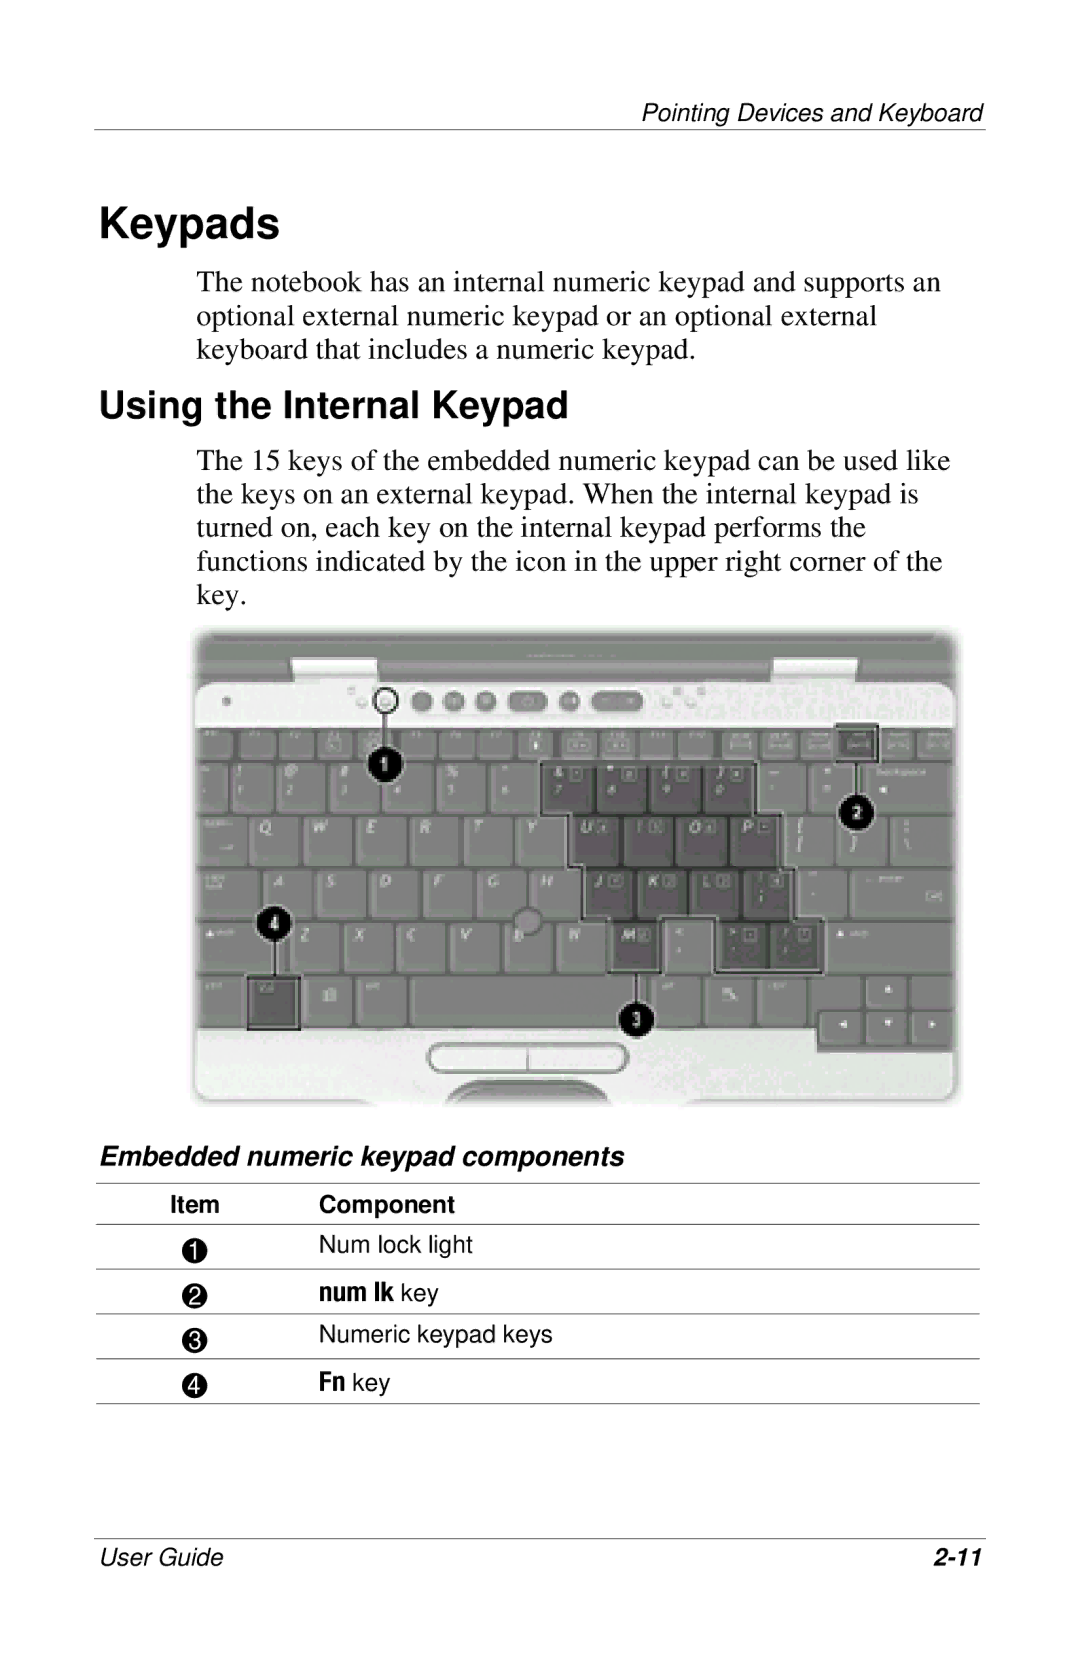 HP 309971-001 manual Keypads, Using the Internal Keypad 